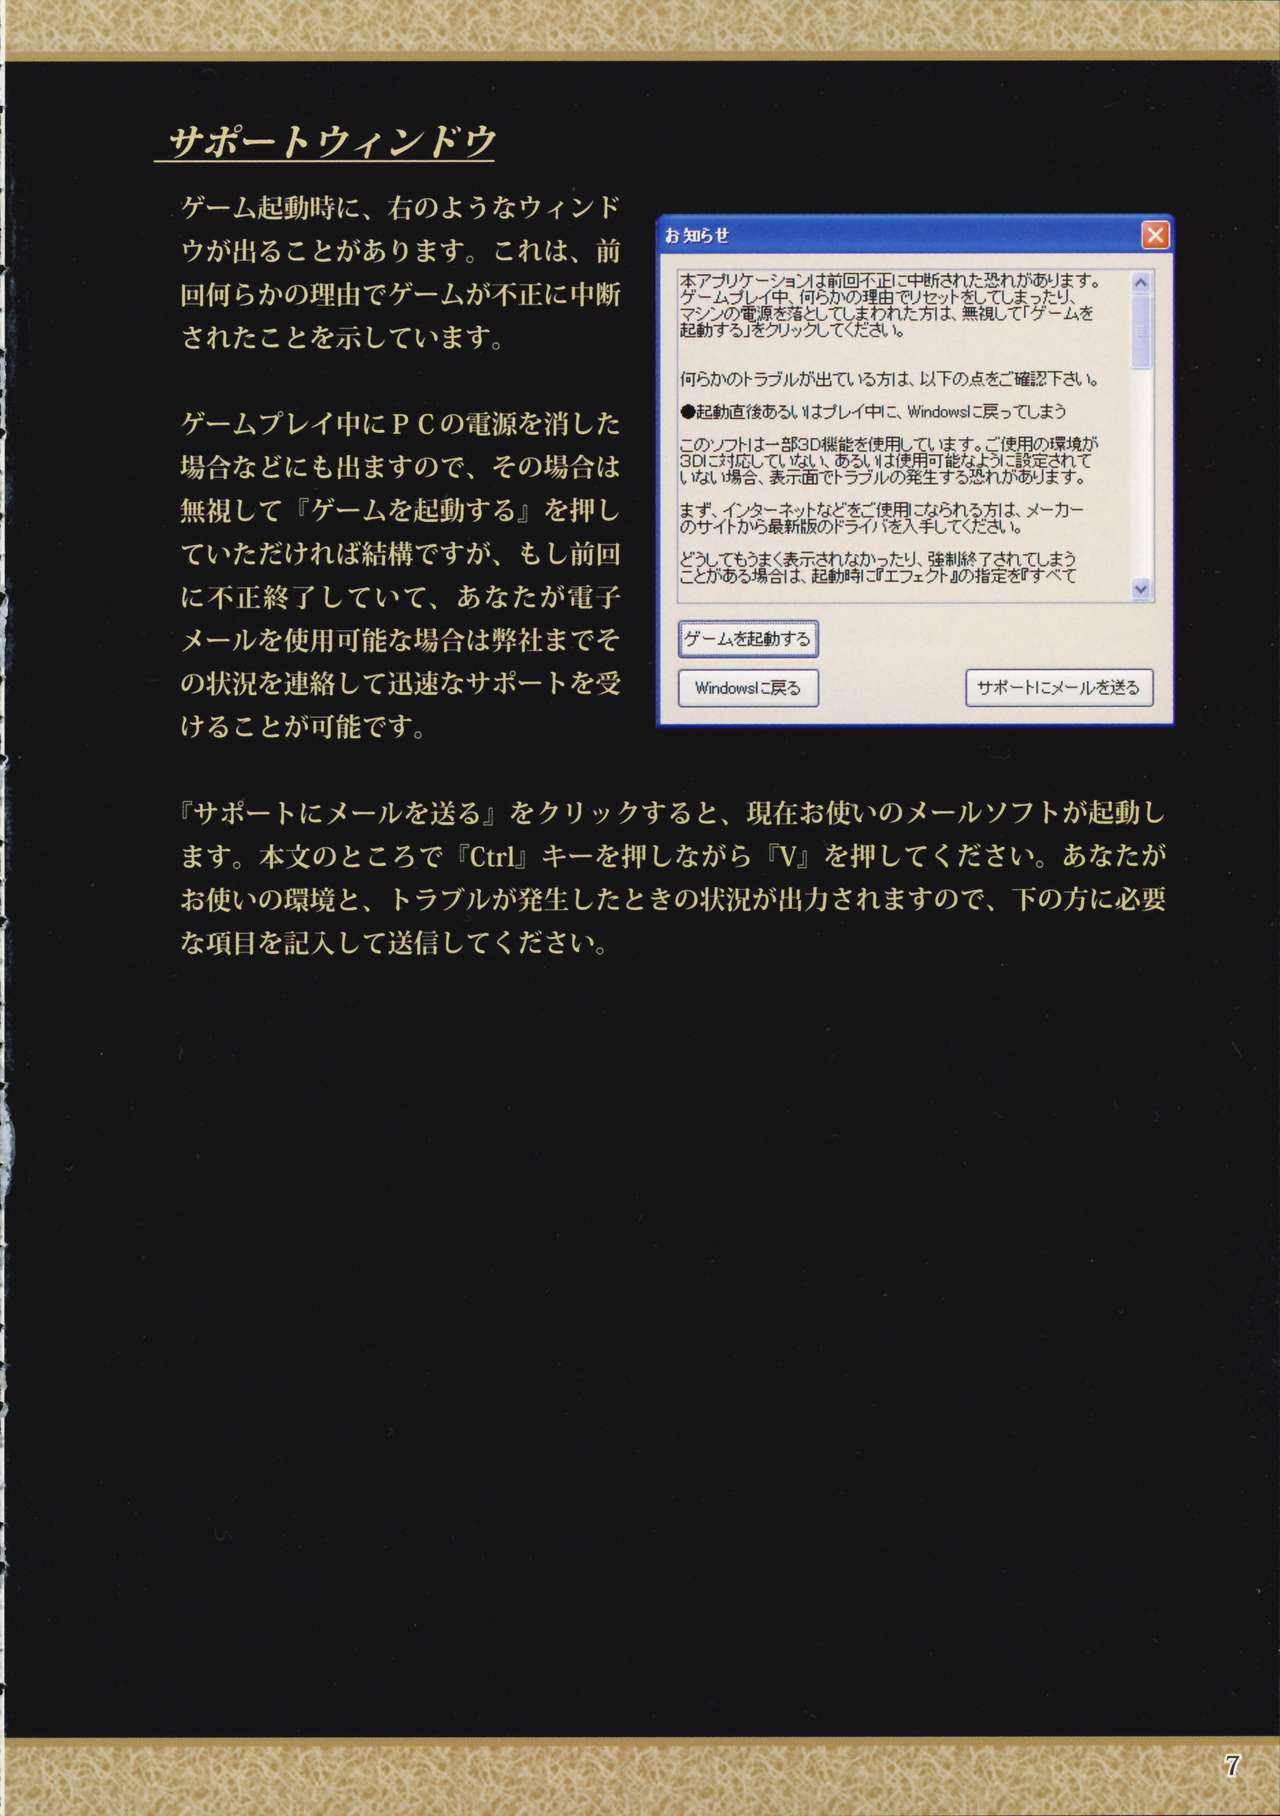 IZUMO 3 - Special Edition Manual 24